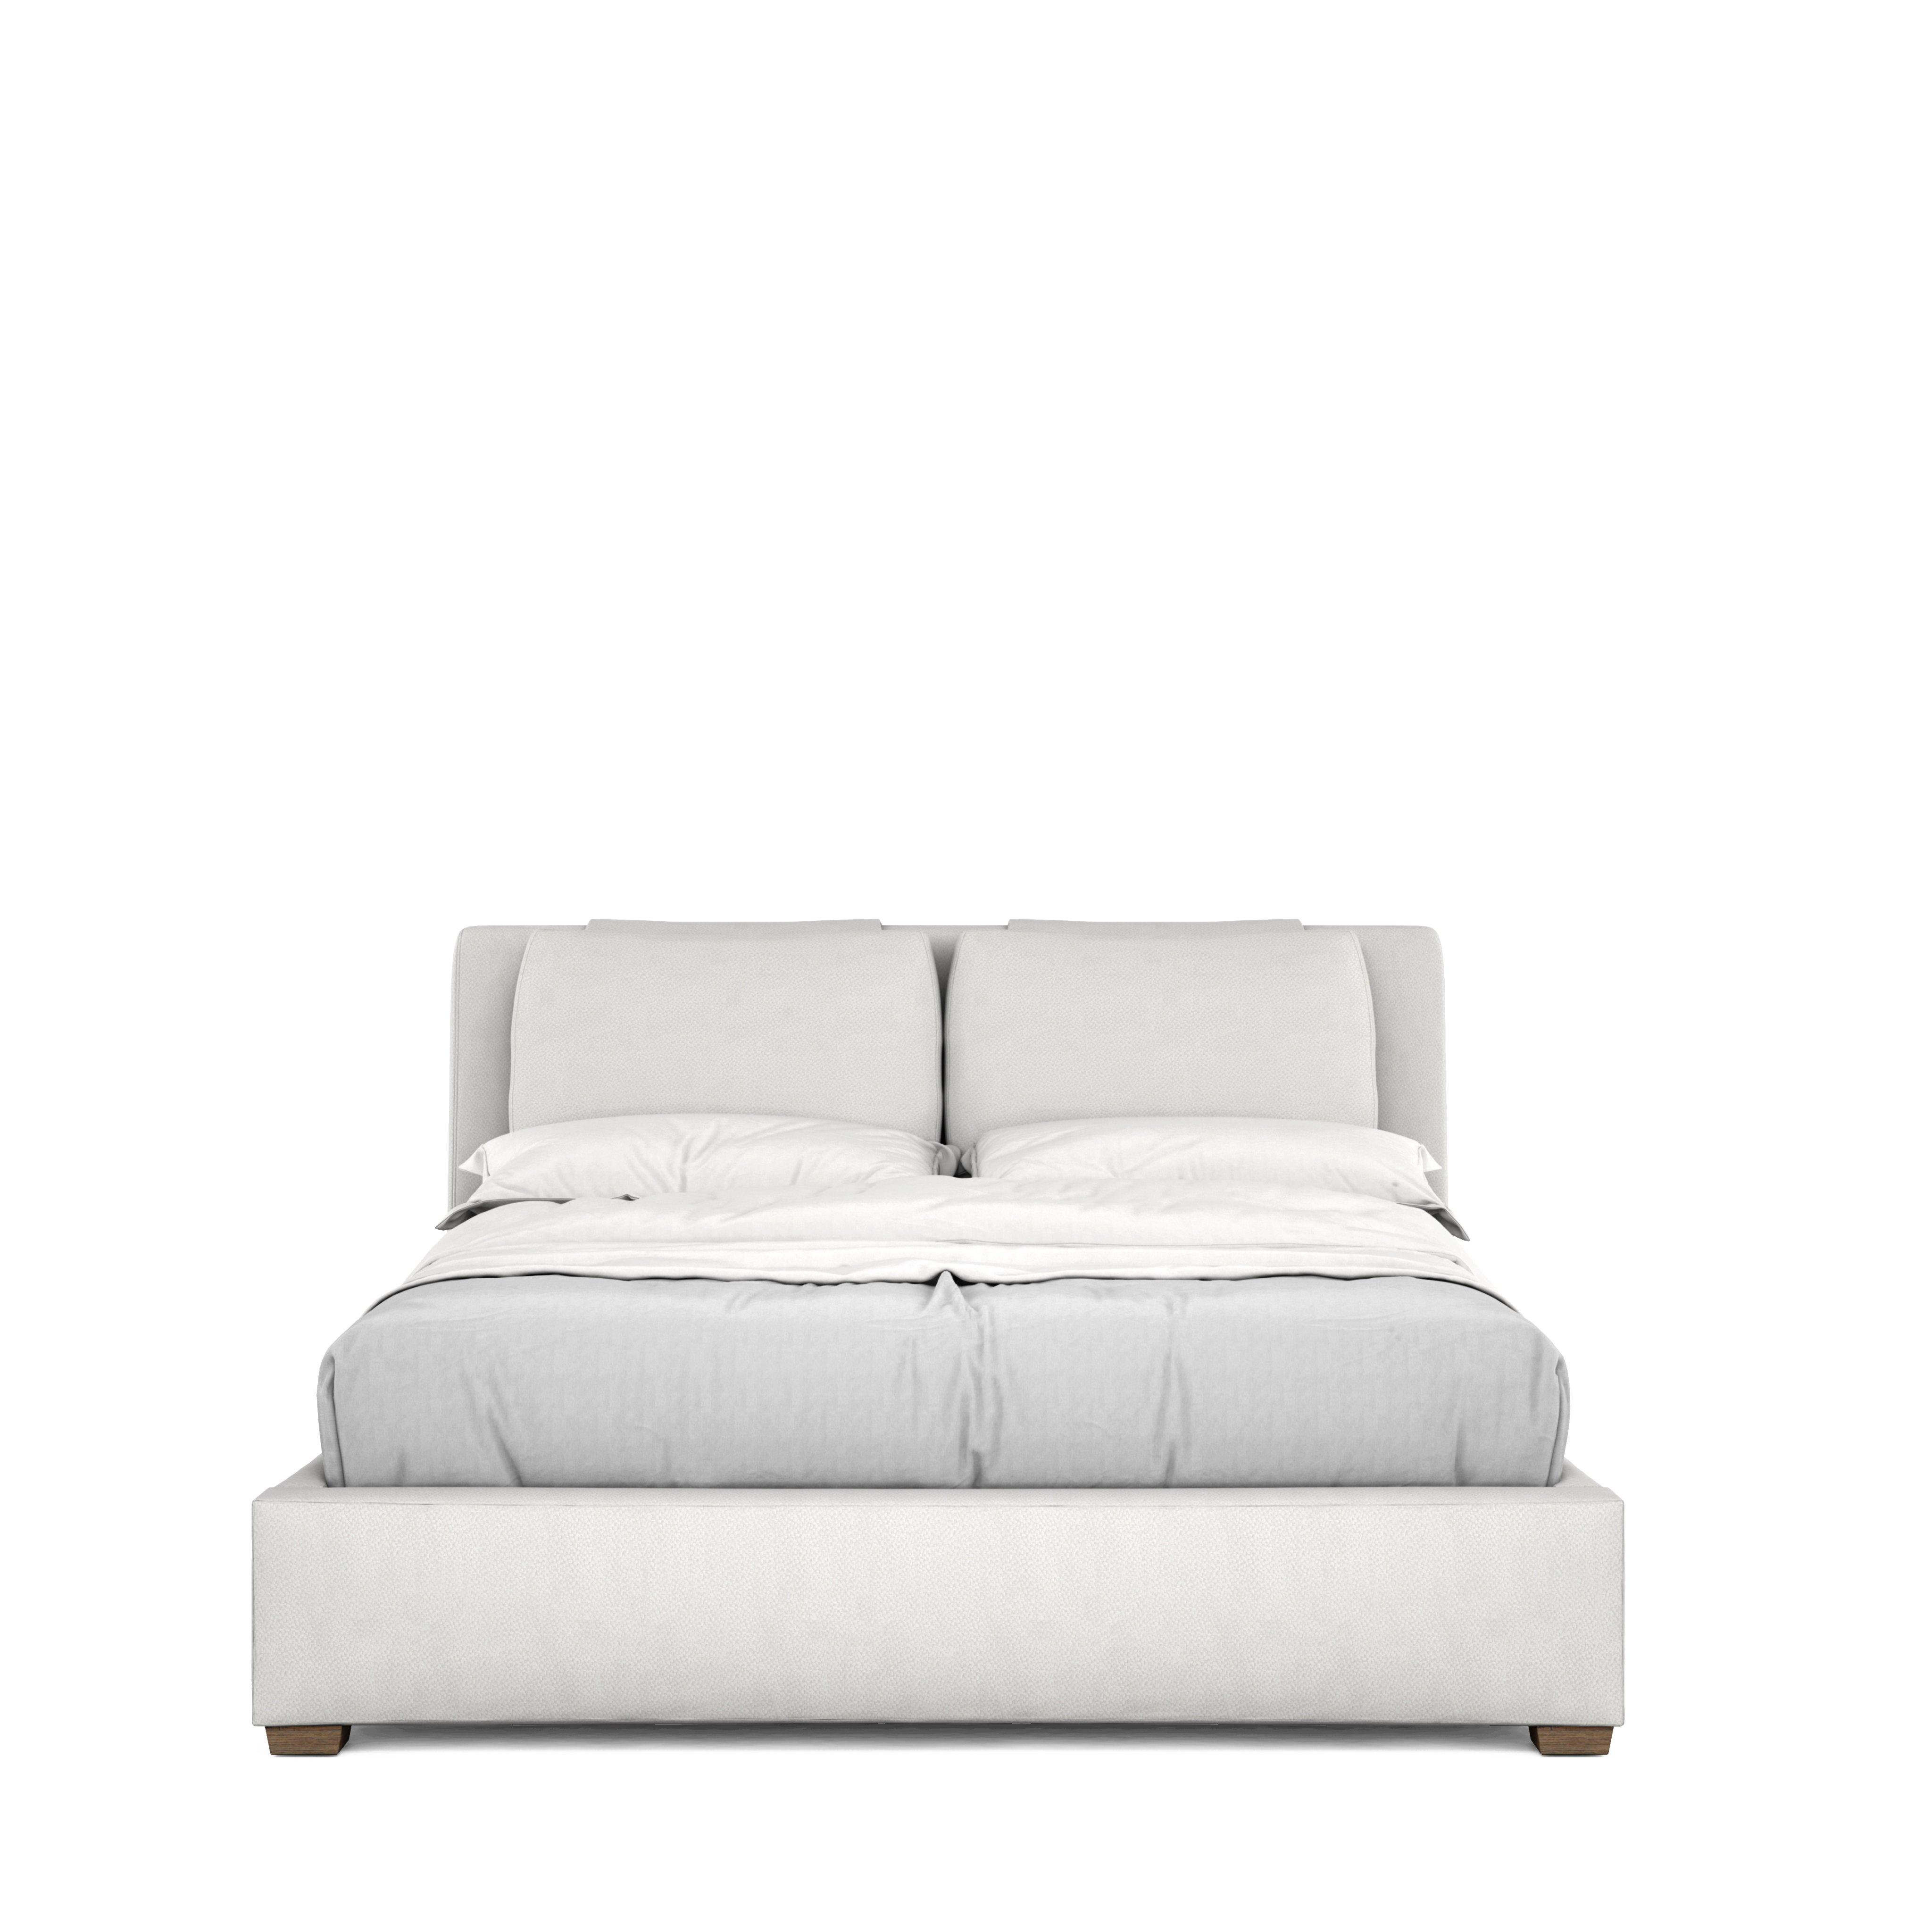 Modern, Transitional Platform Bed Stockyard 284125-2303 in Light Gray, White Fabric